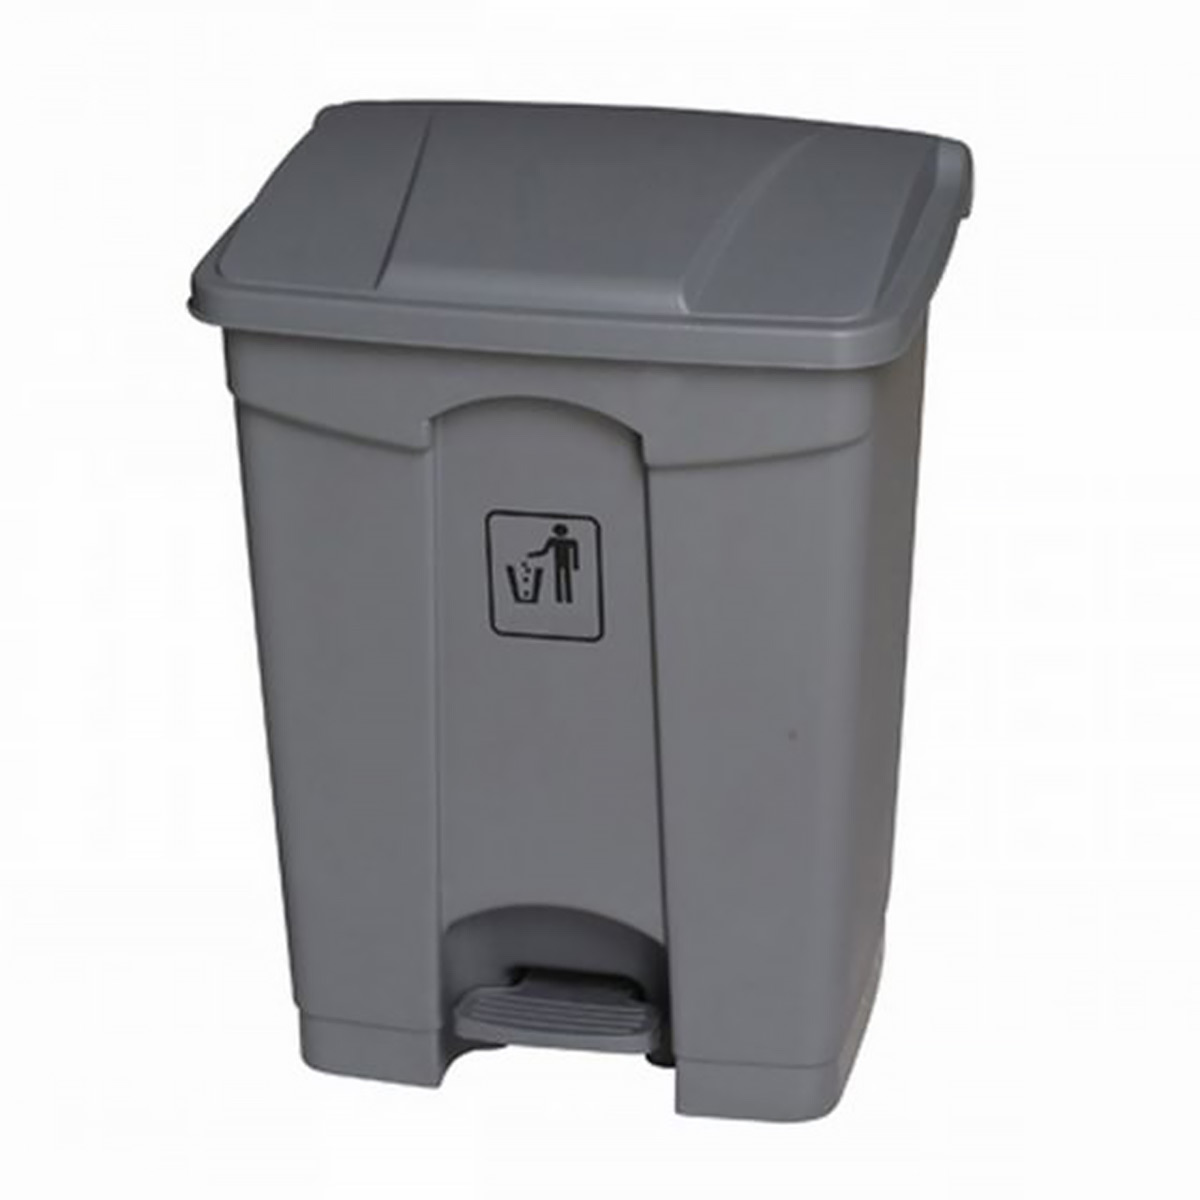 bins-bin-liners-bags-rubbish-bins-heavy-duty-pedal-bin-grey-68L-litre-durable-plastic-super-easy-clean-handy-foot-pedal-vjs-distributors-BP72144